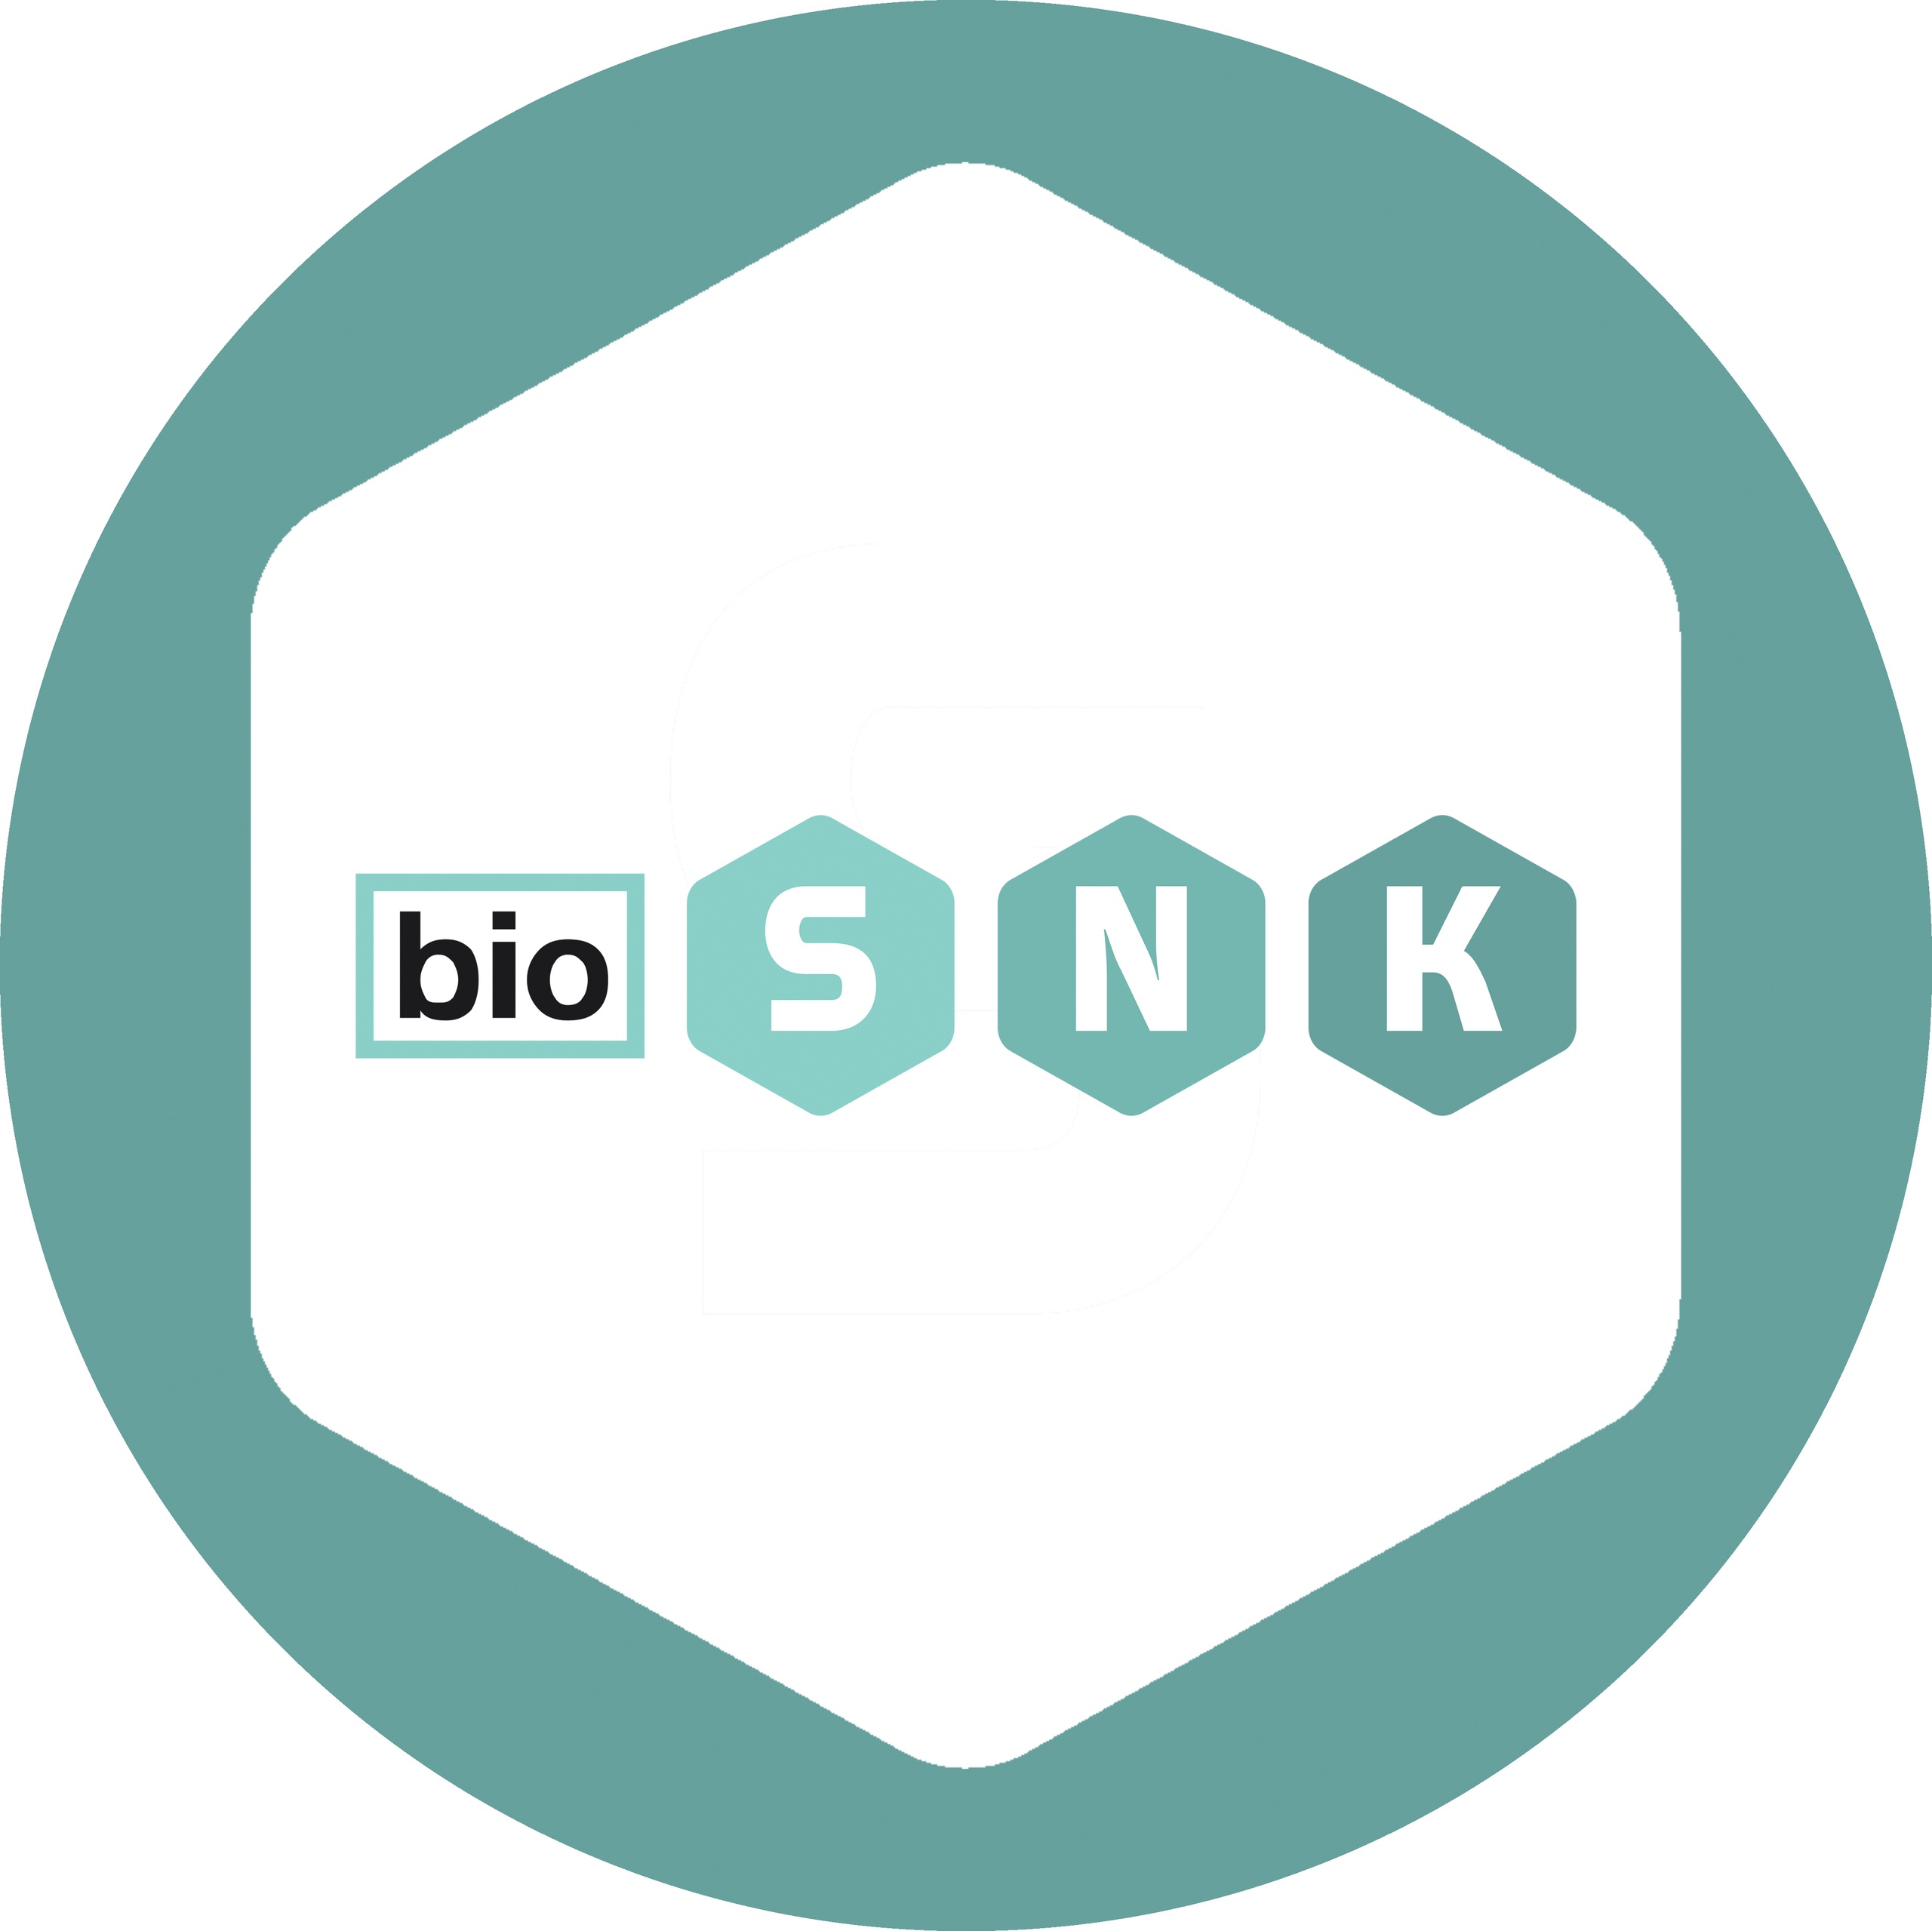 Bio SNK | Био СНК